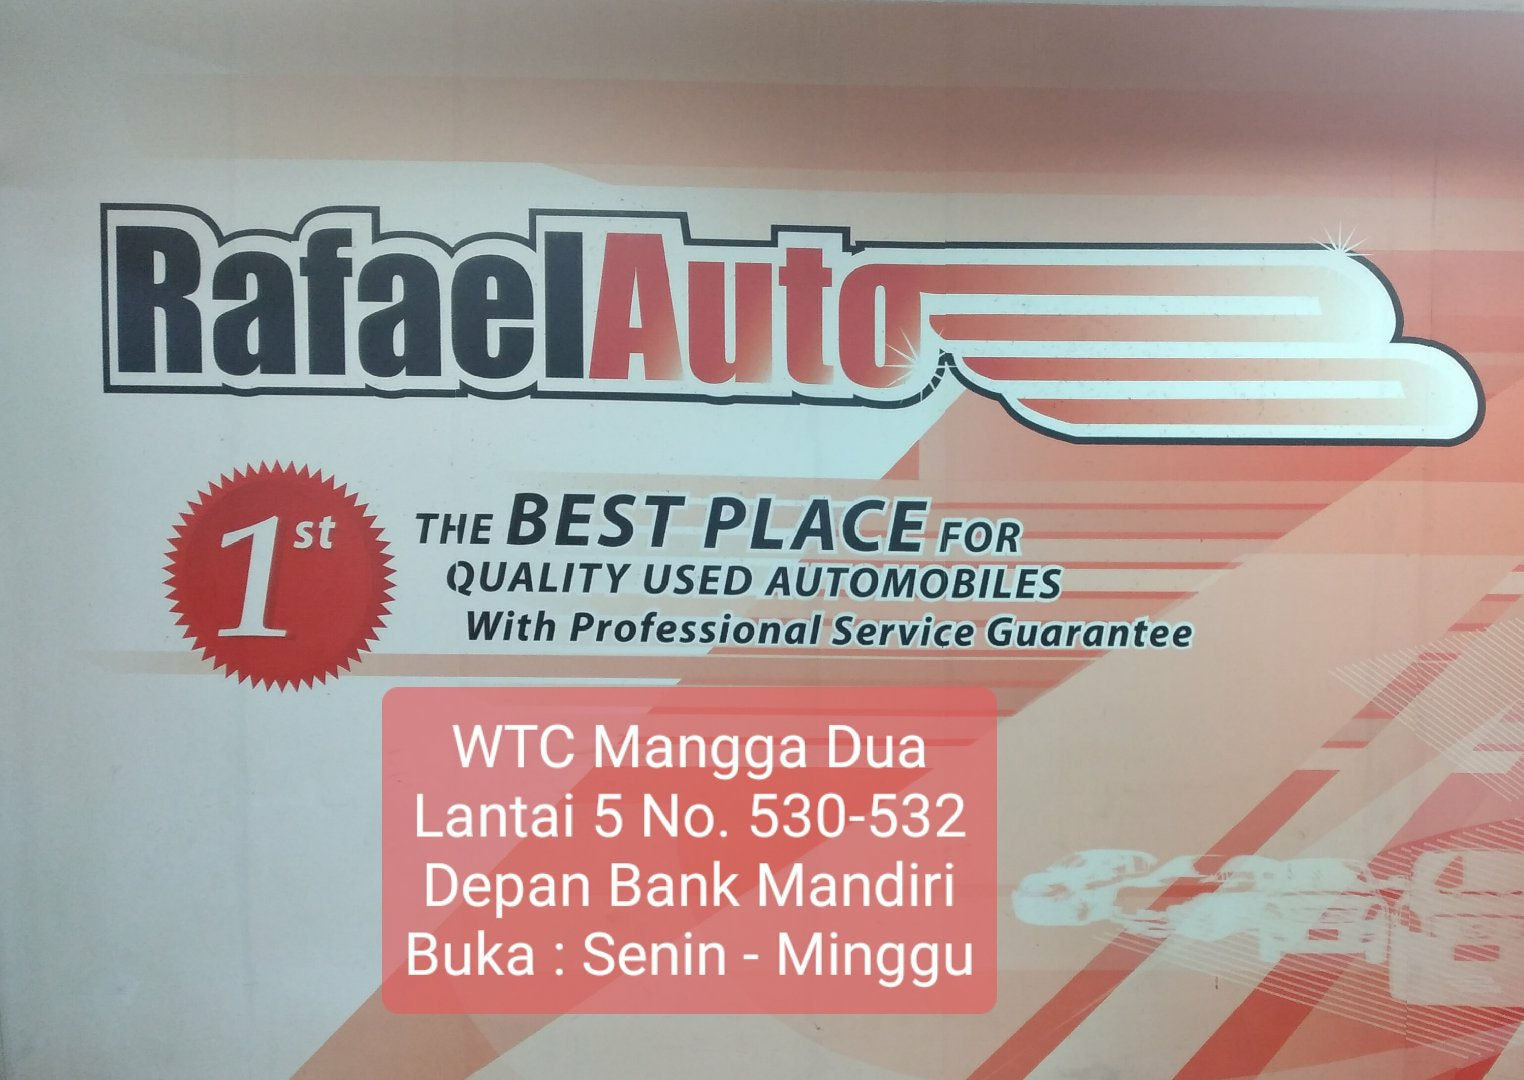 Rafael Auto Showroom Mobil Bekas Jakarta Utara Garasi id